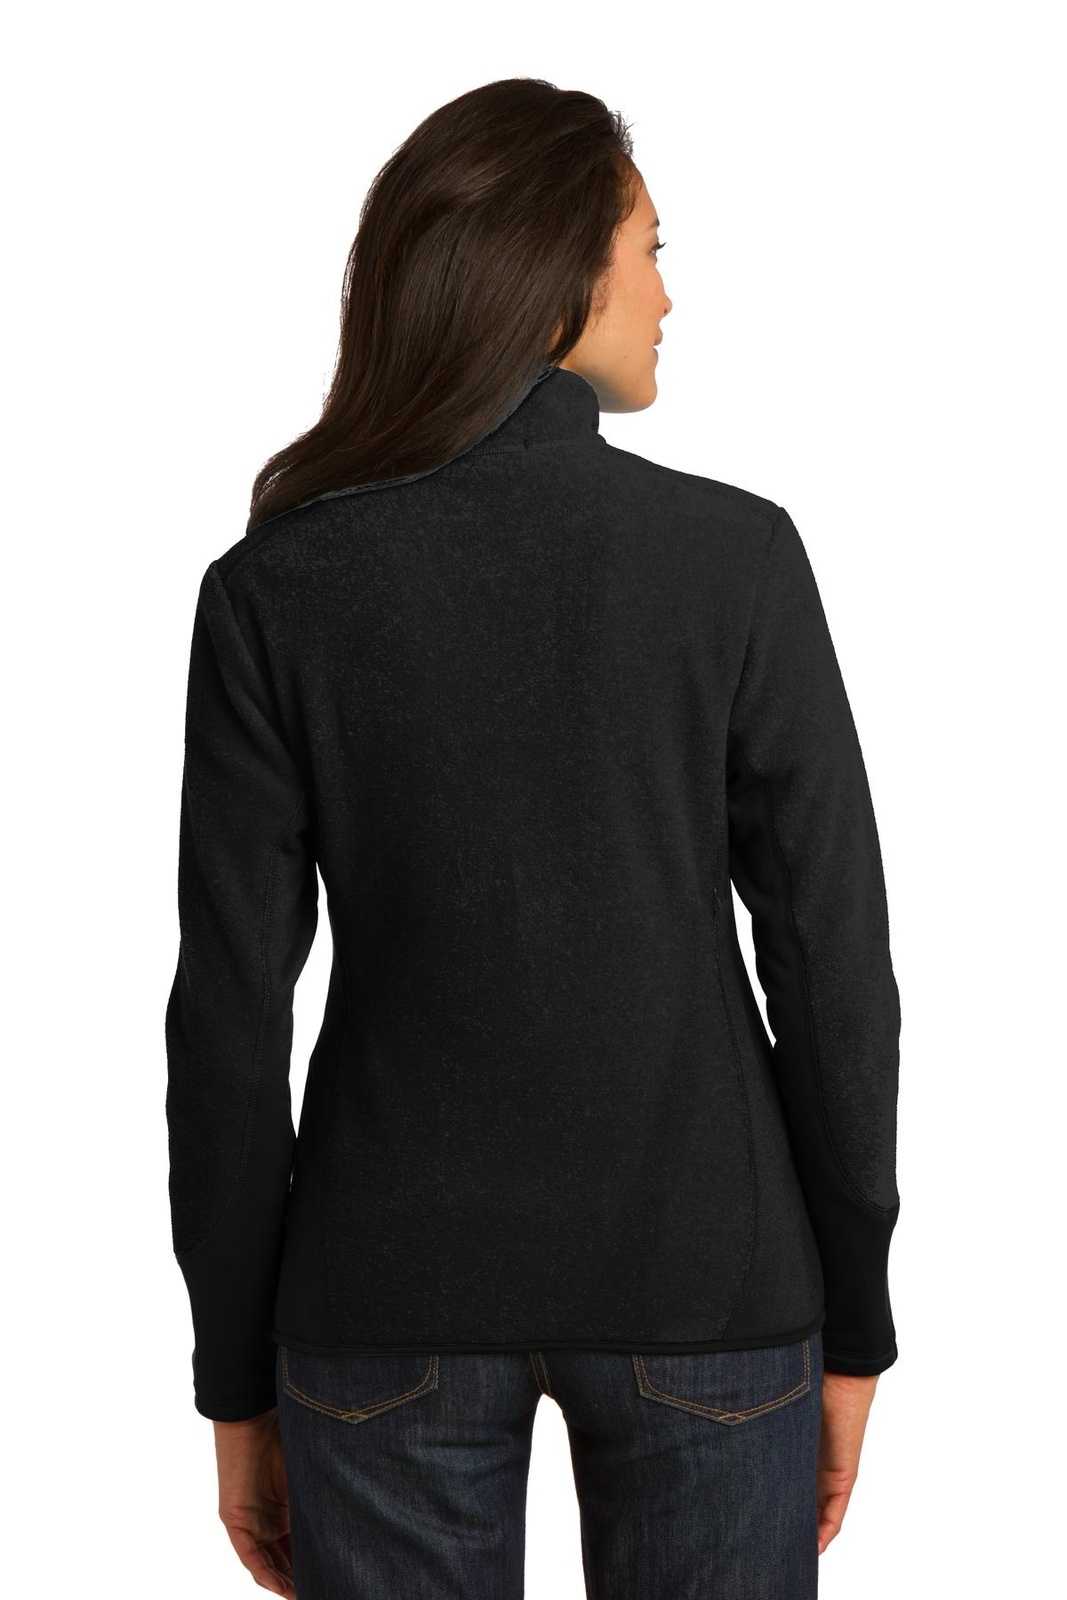 Port Authority L227 Ladies R-Tek Pro Fleece Full-Zip Jacket - Black Black - HIT a Double - 1